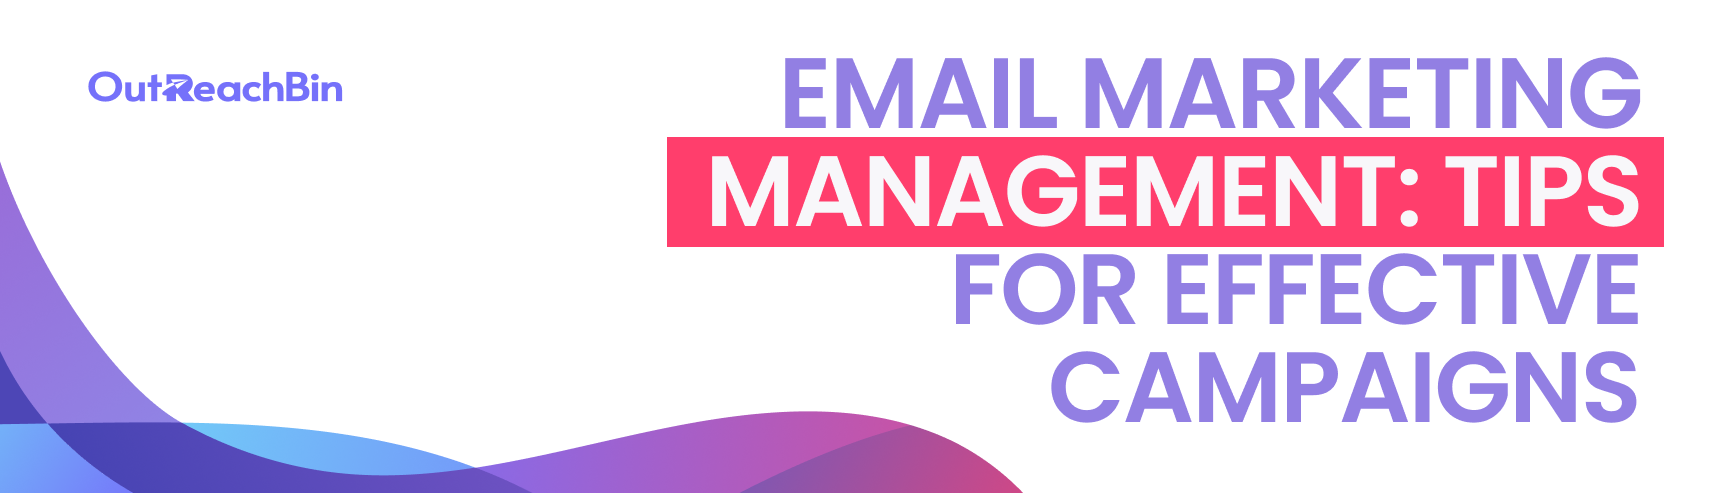 email marketing management